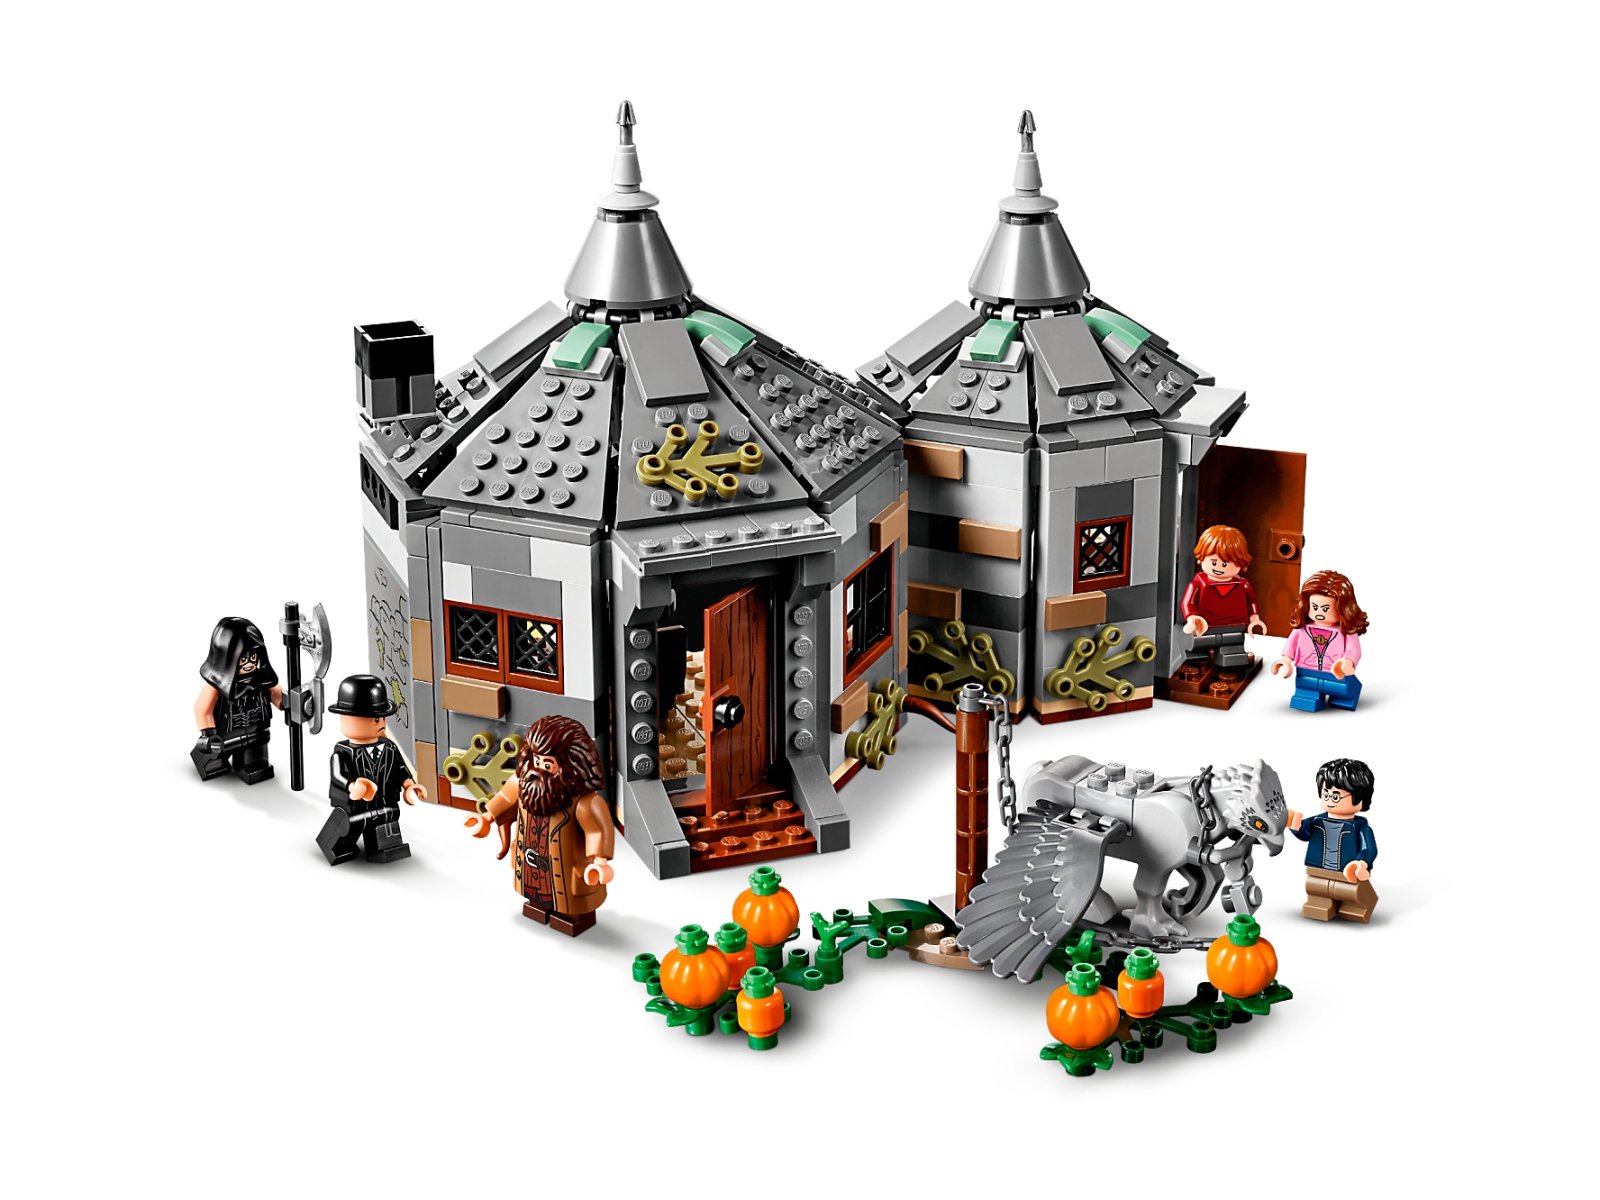 LEGO 75947 Harry Chatka Hagrida: ratunek Hardodziobowi